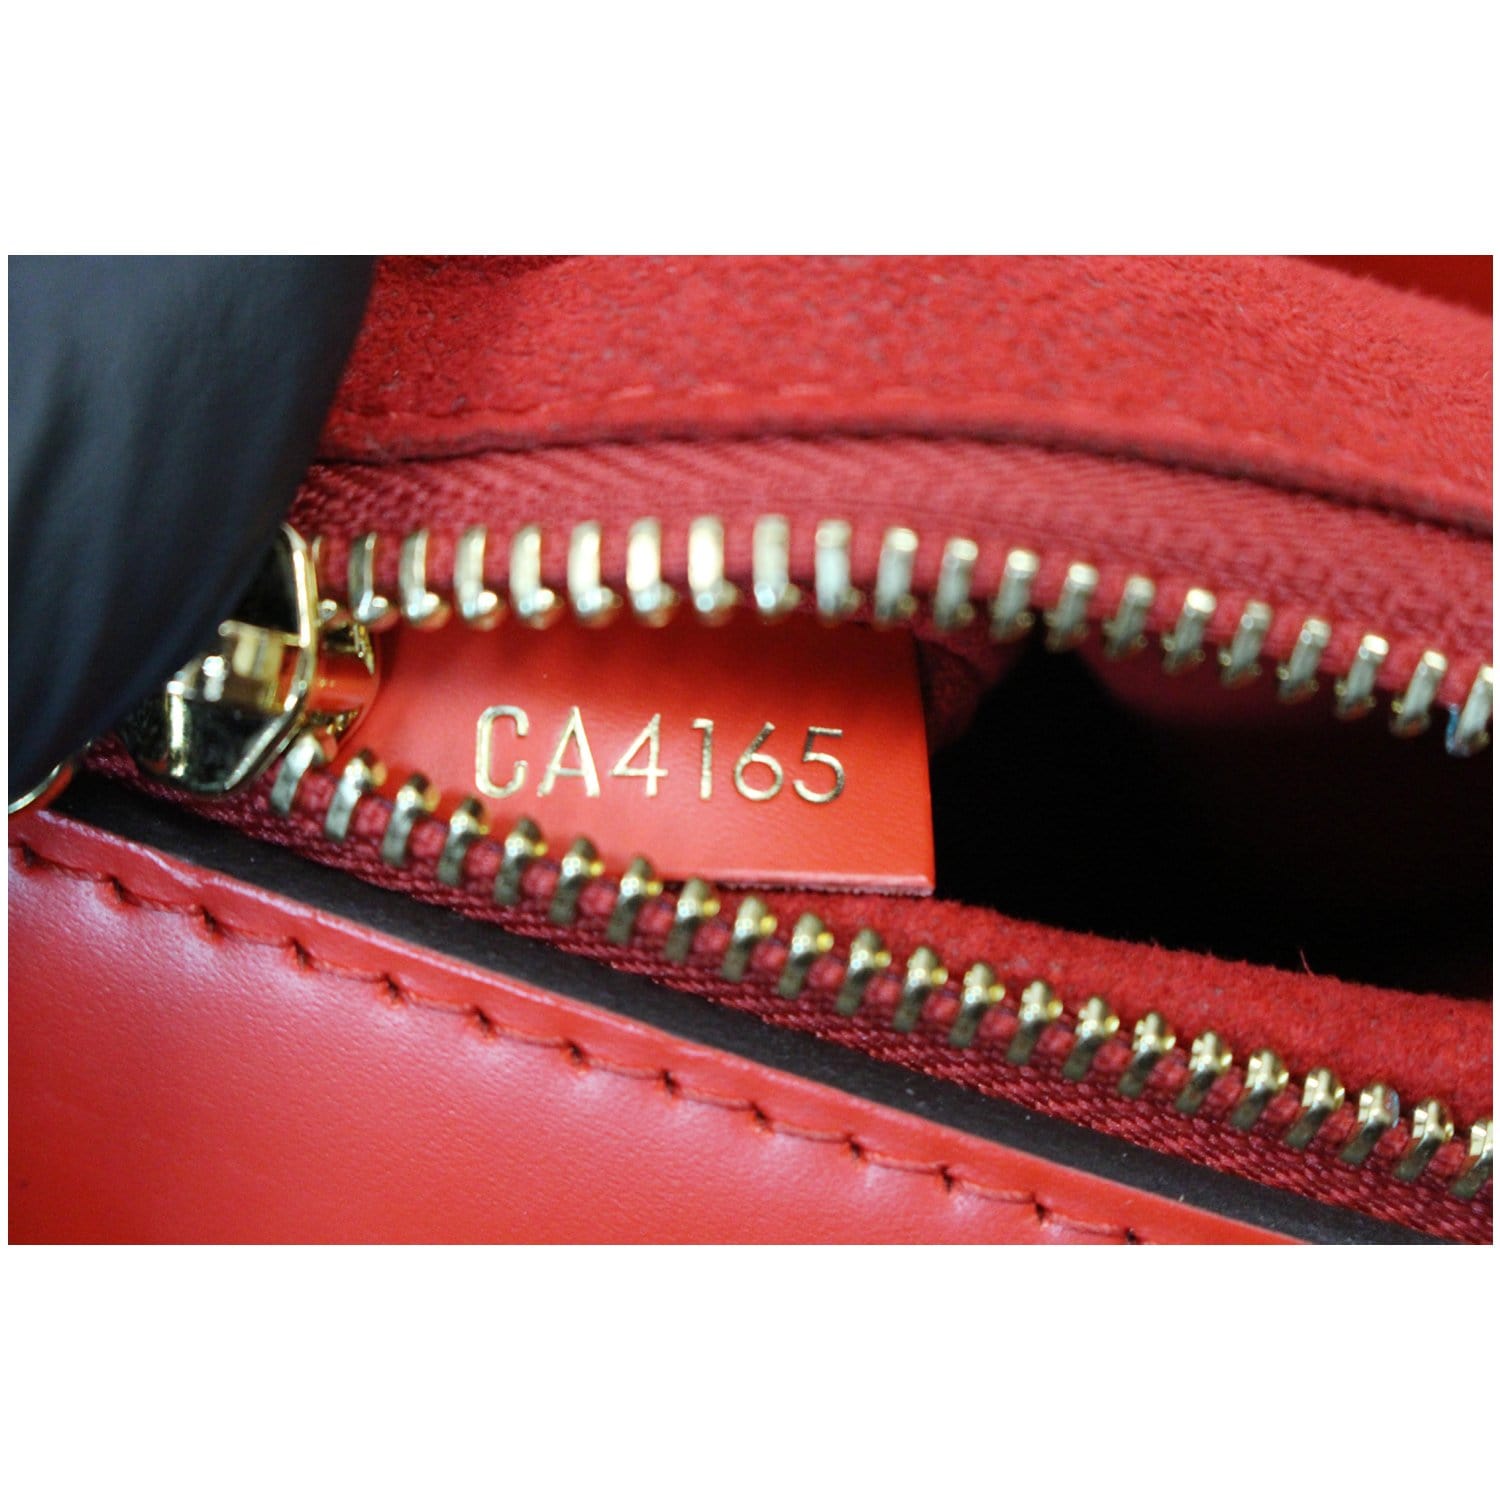 Authenticated Used LOUIS VUITTON Shoulder Bag Phoenix Monogram M41537 Brown  Red Ladies 